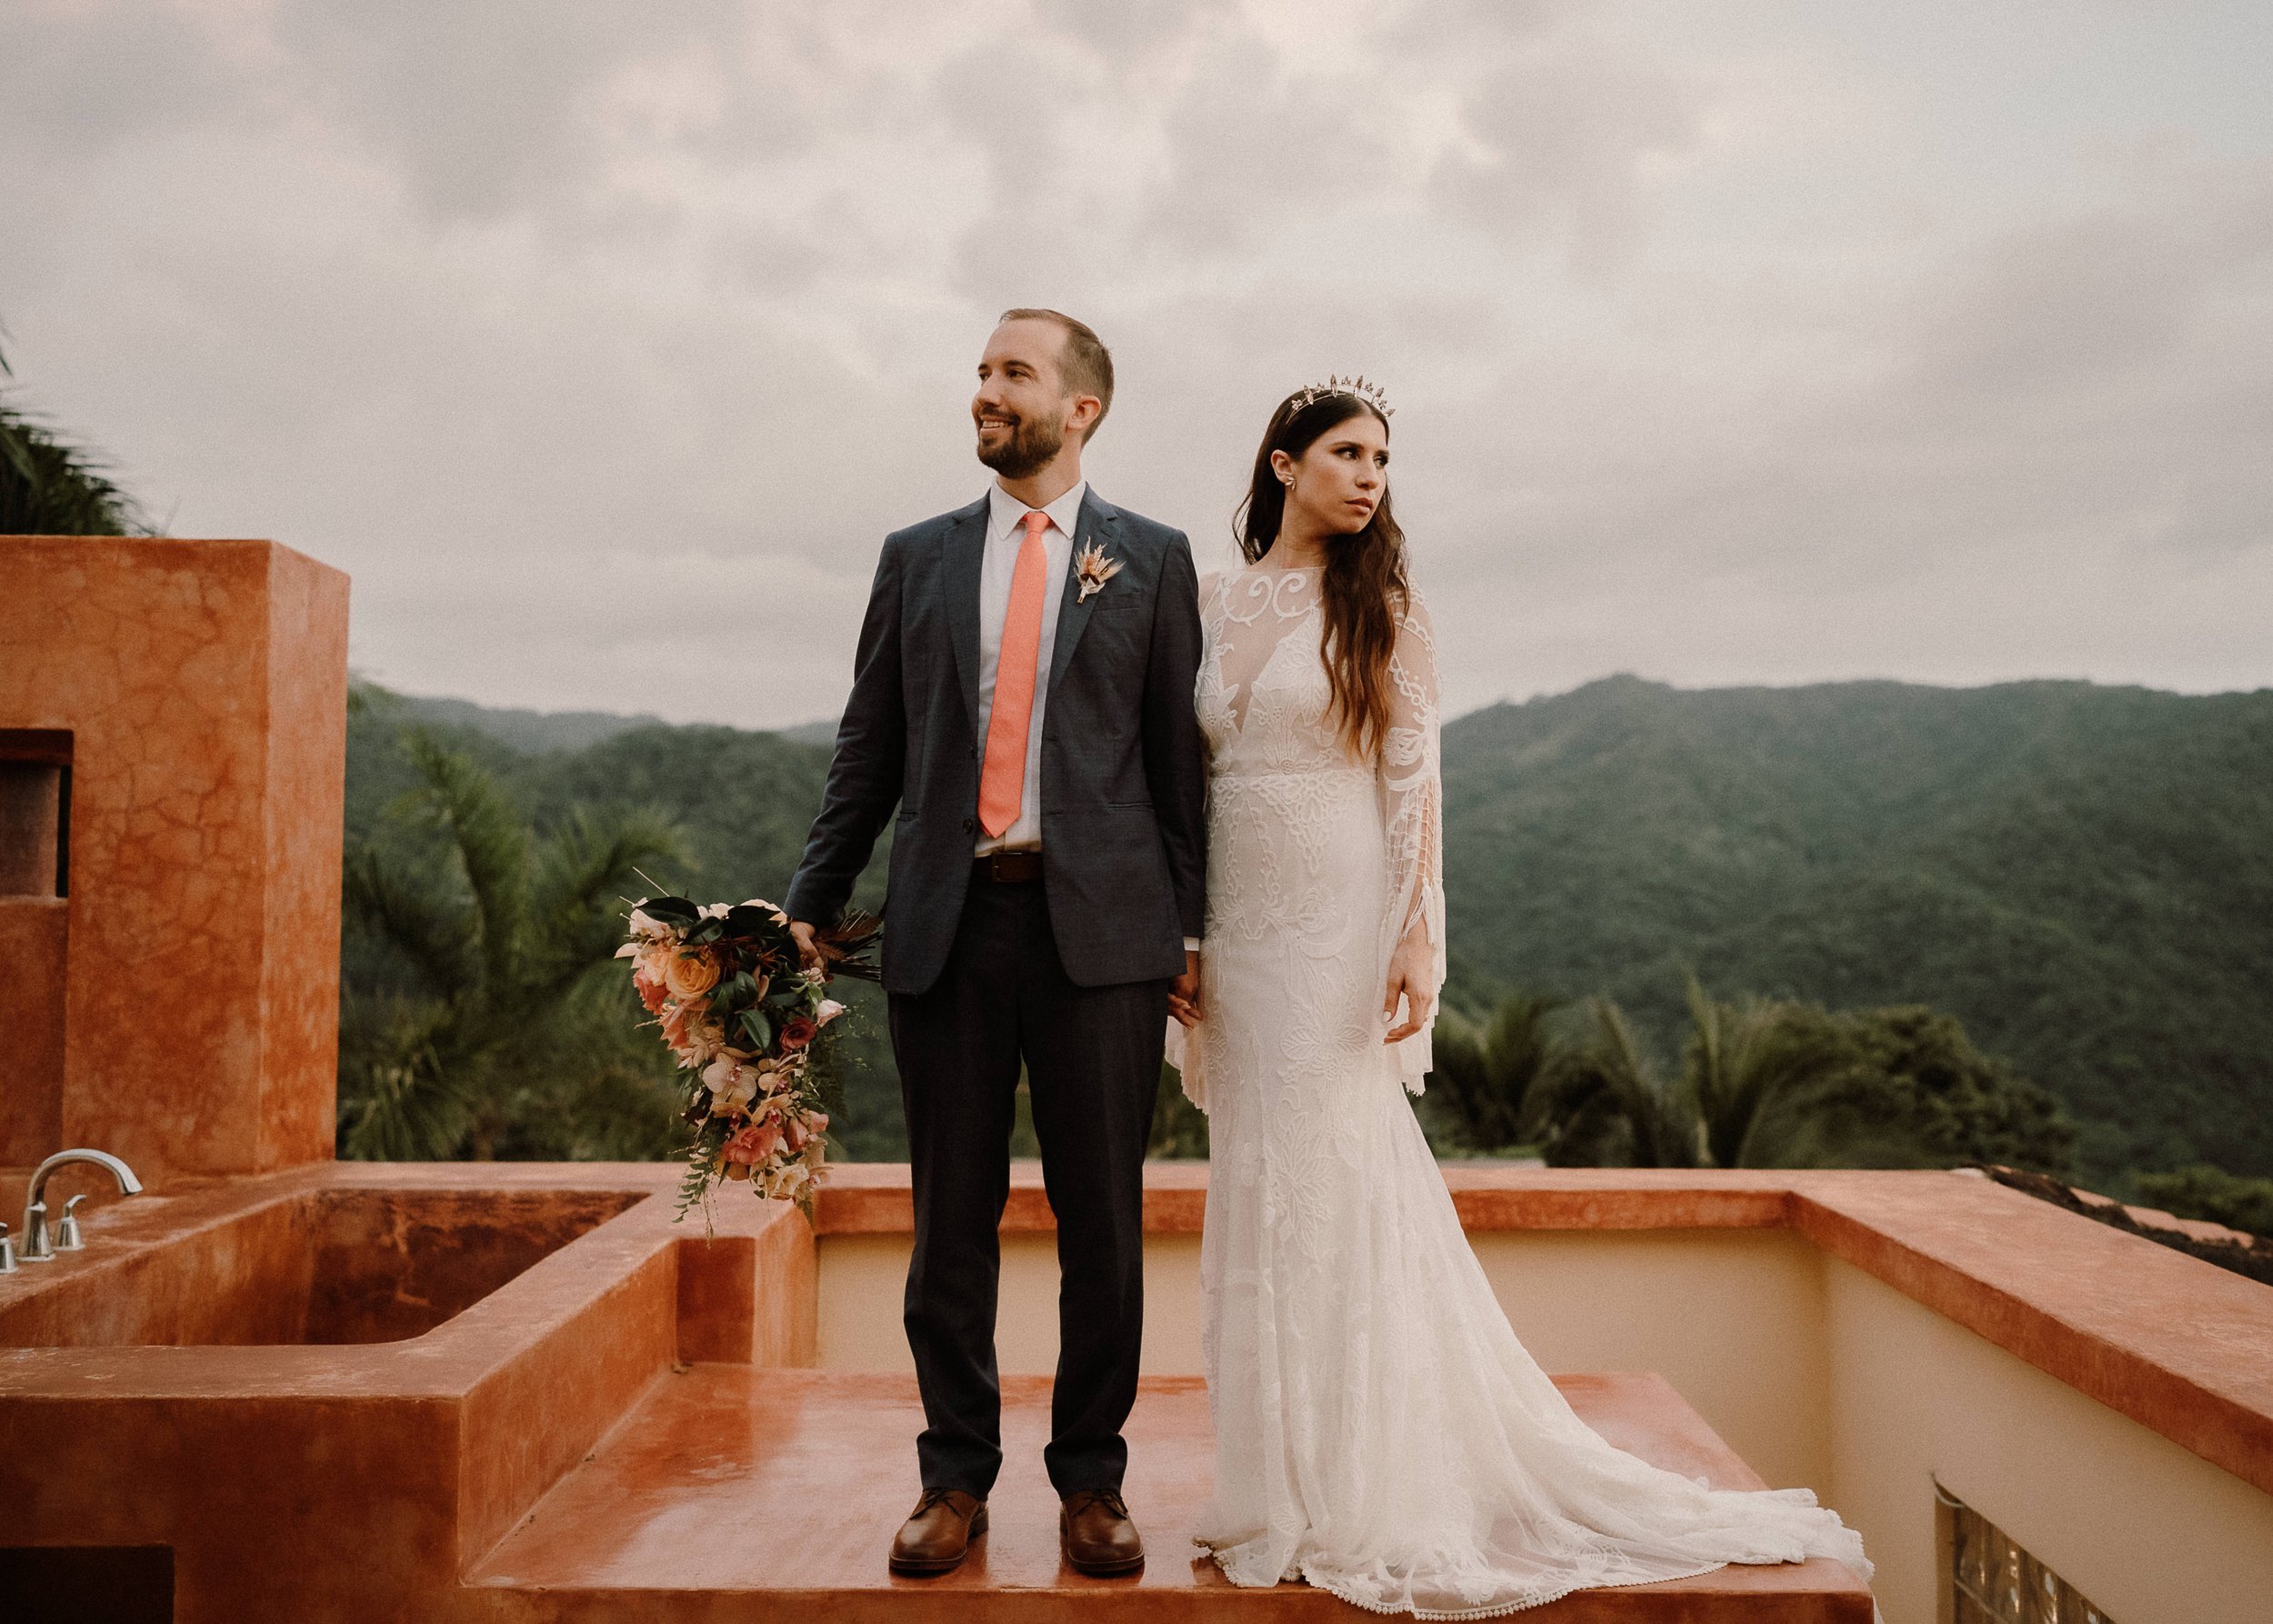 A Rue de Seine wedding dress and Tilly Thomas Lux crown for a Costa Rica wedding